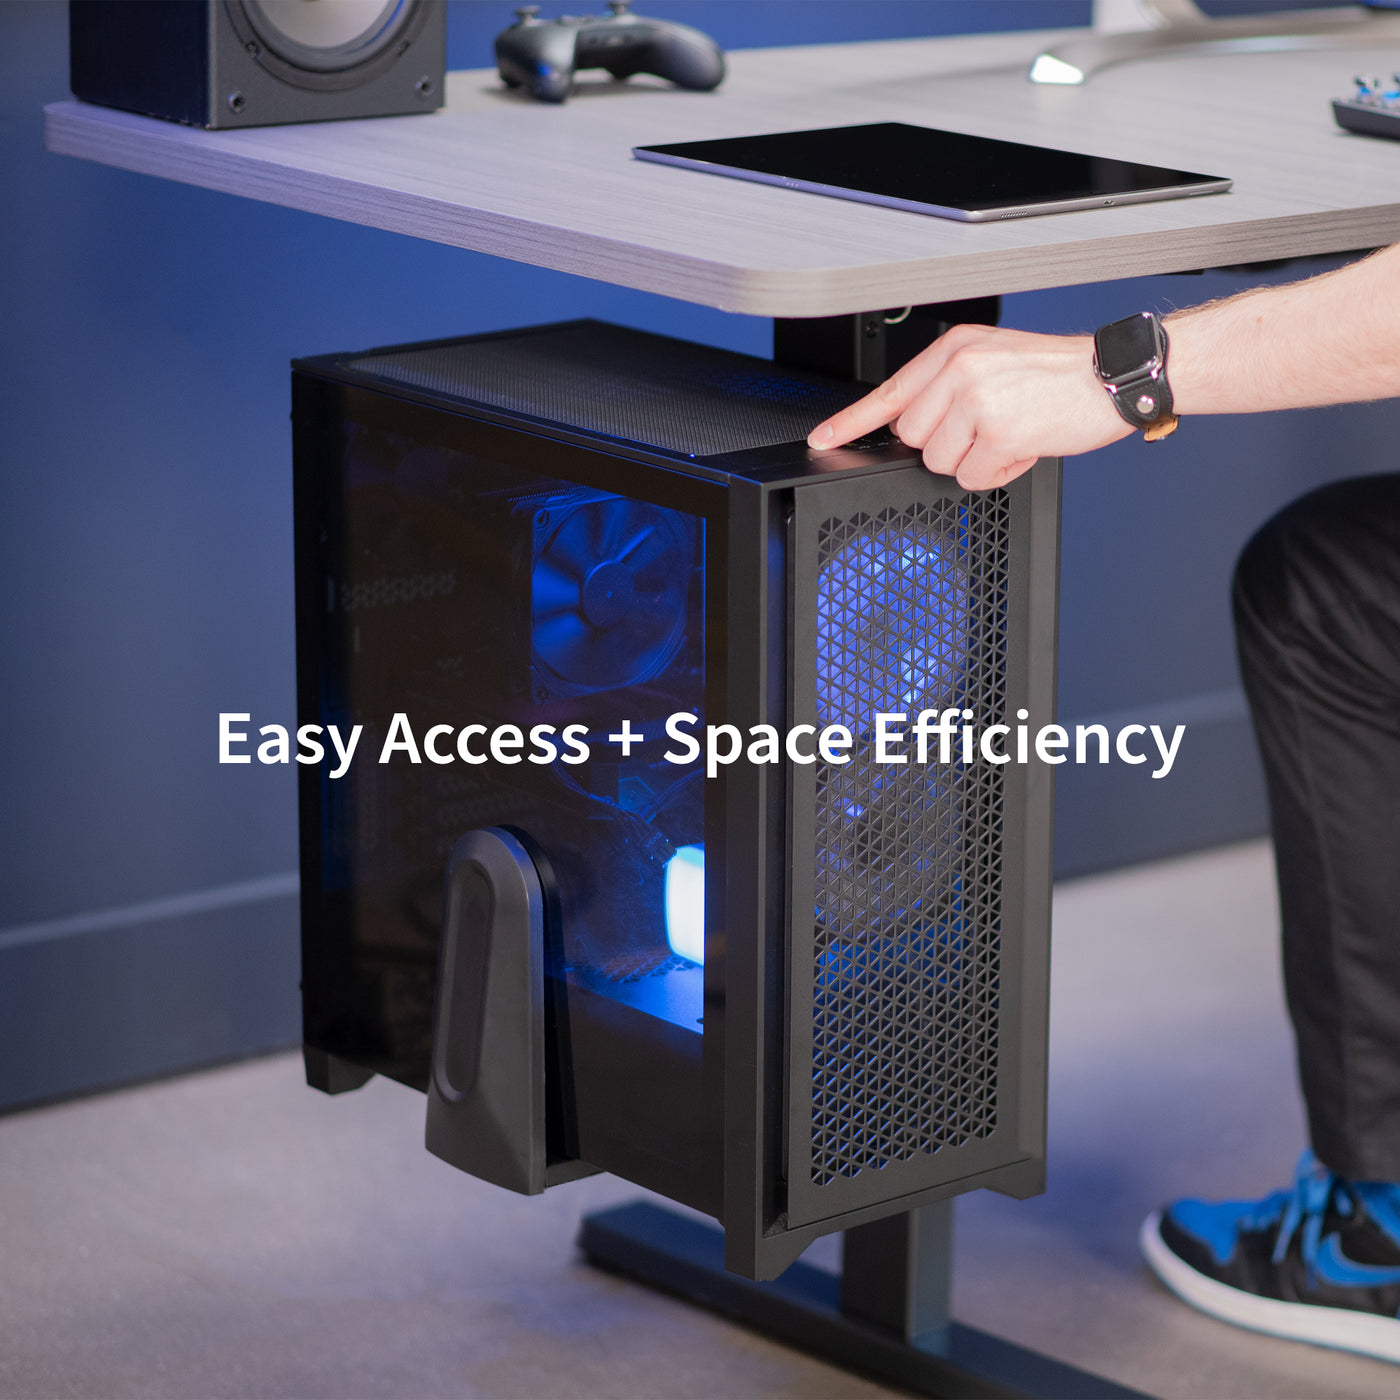 Large heavy-duty adjustable space saving under desk PC mount.